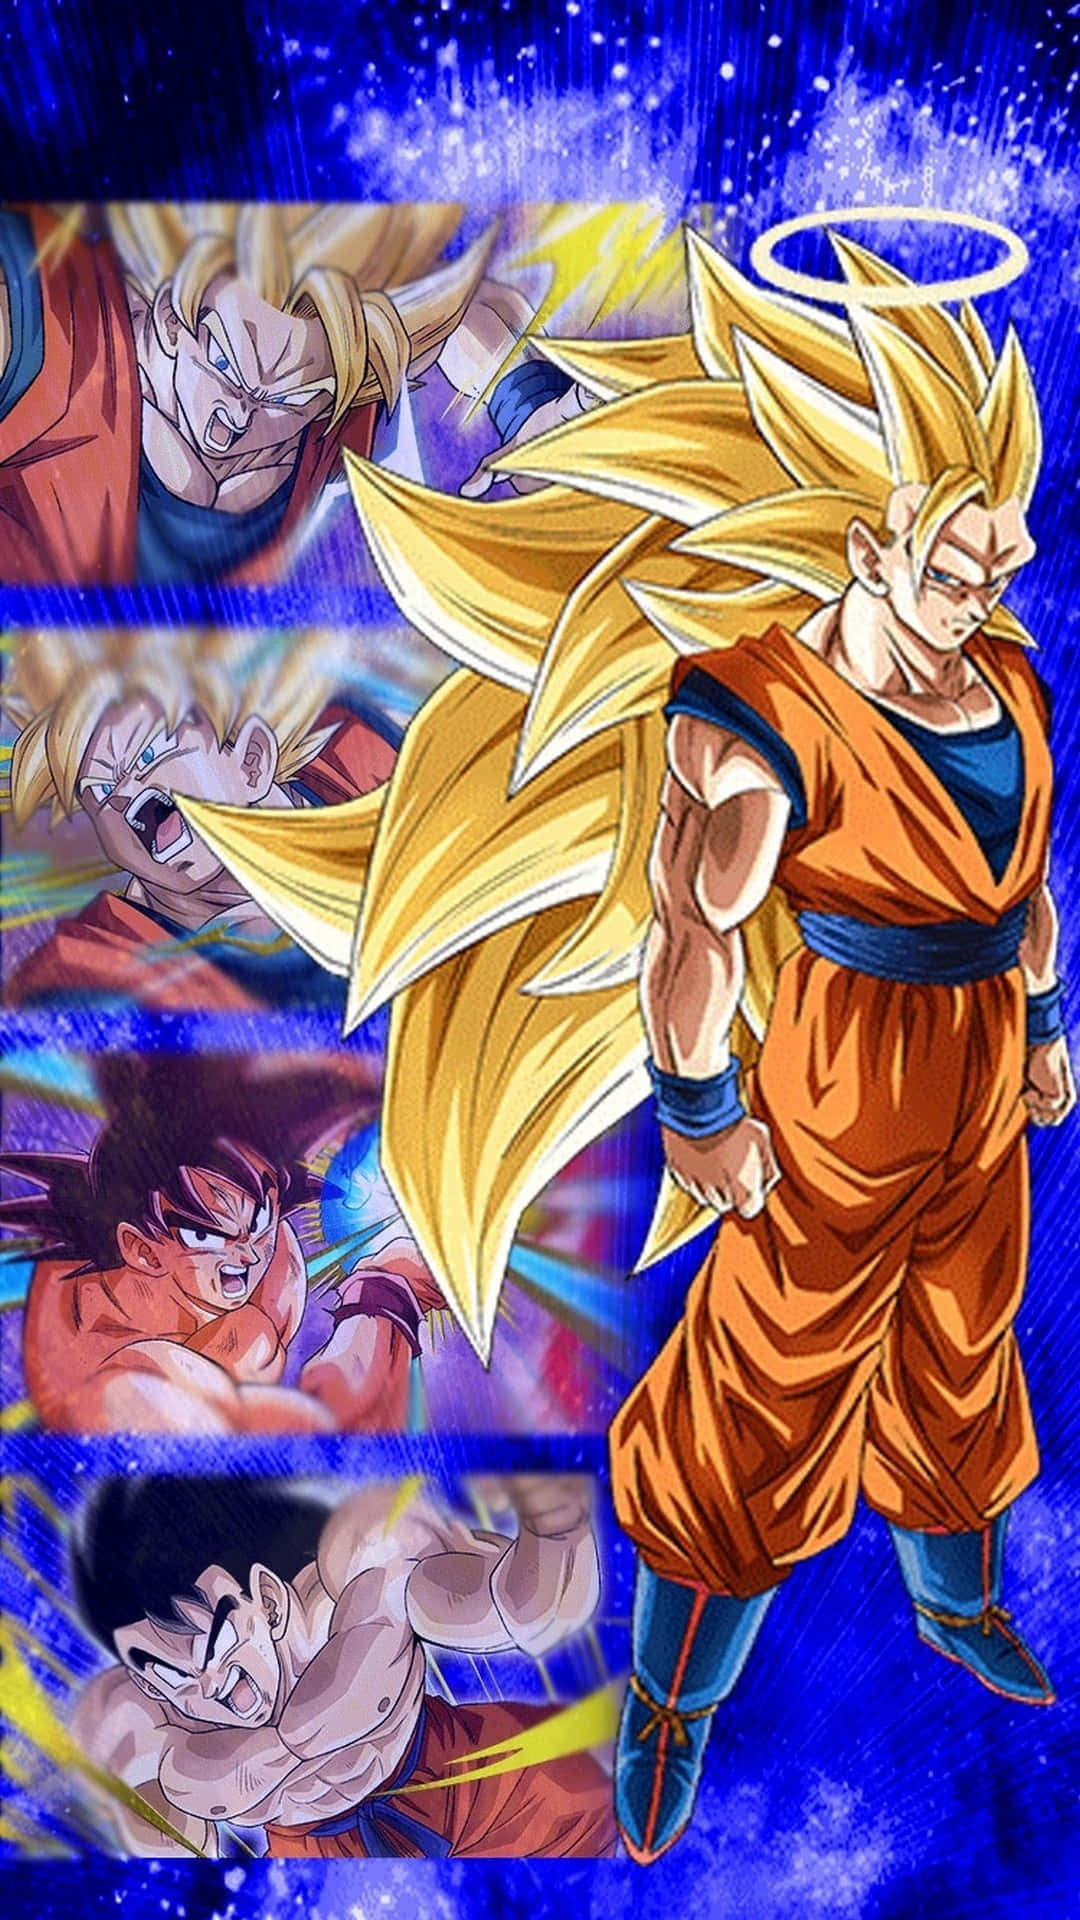 Download Goku Ascends to Super Saiyan 3 Wallpaper